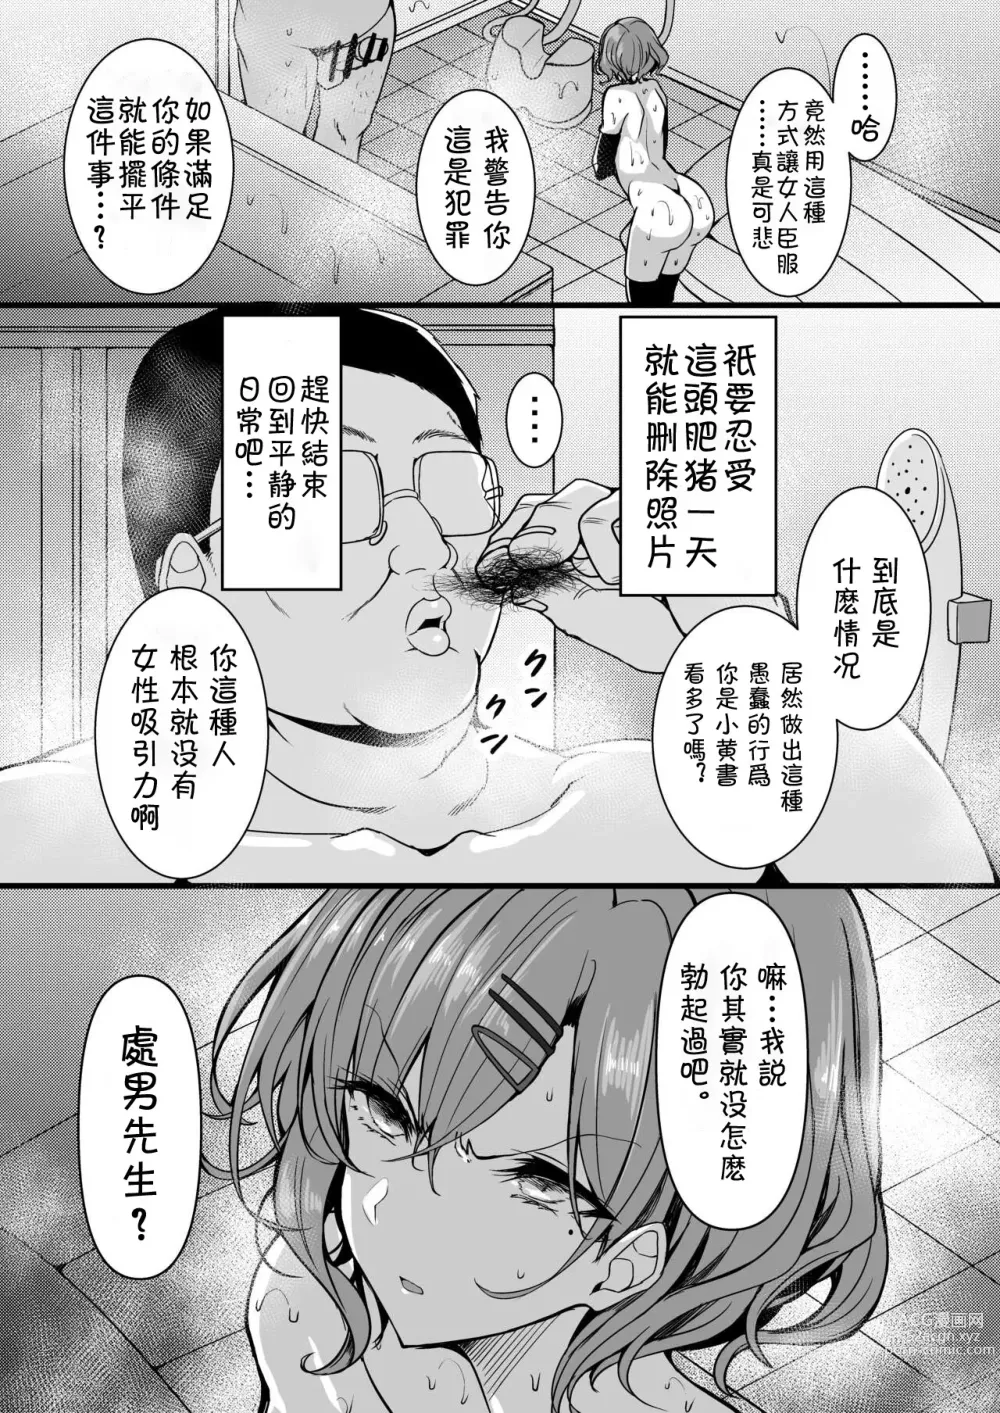 Page 6 of doujinshi HTSK15